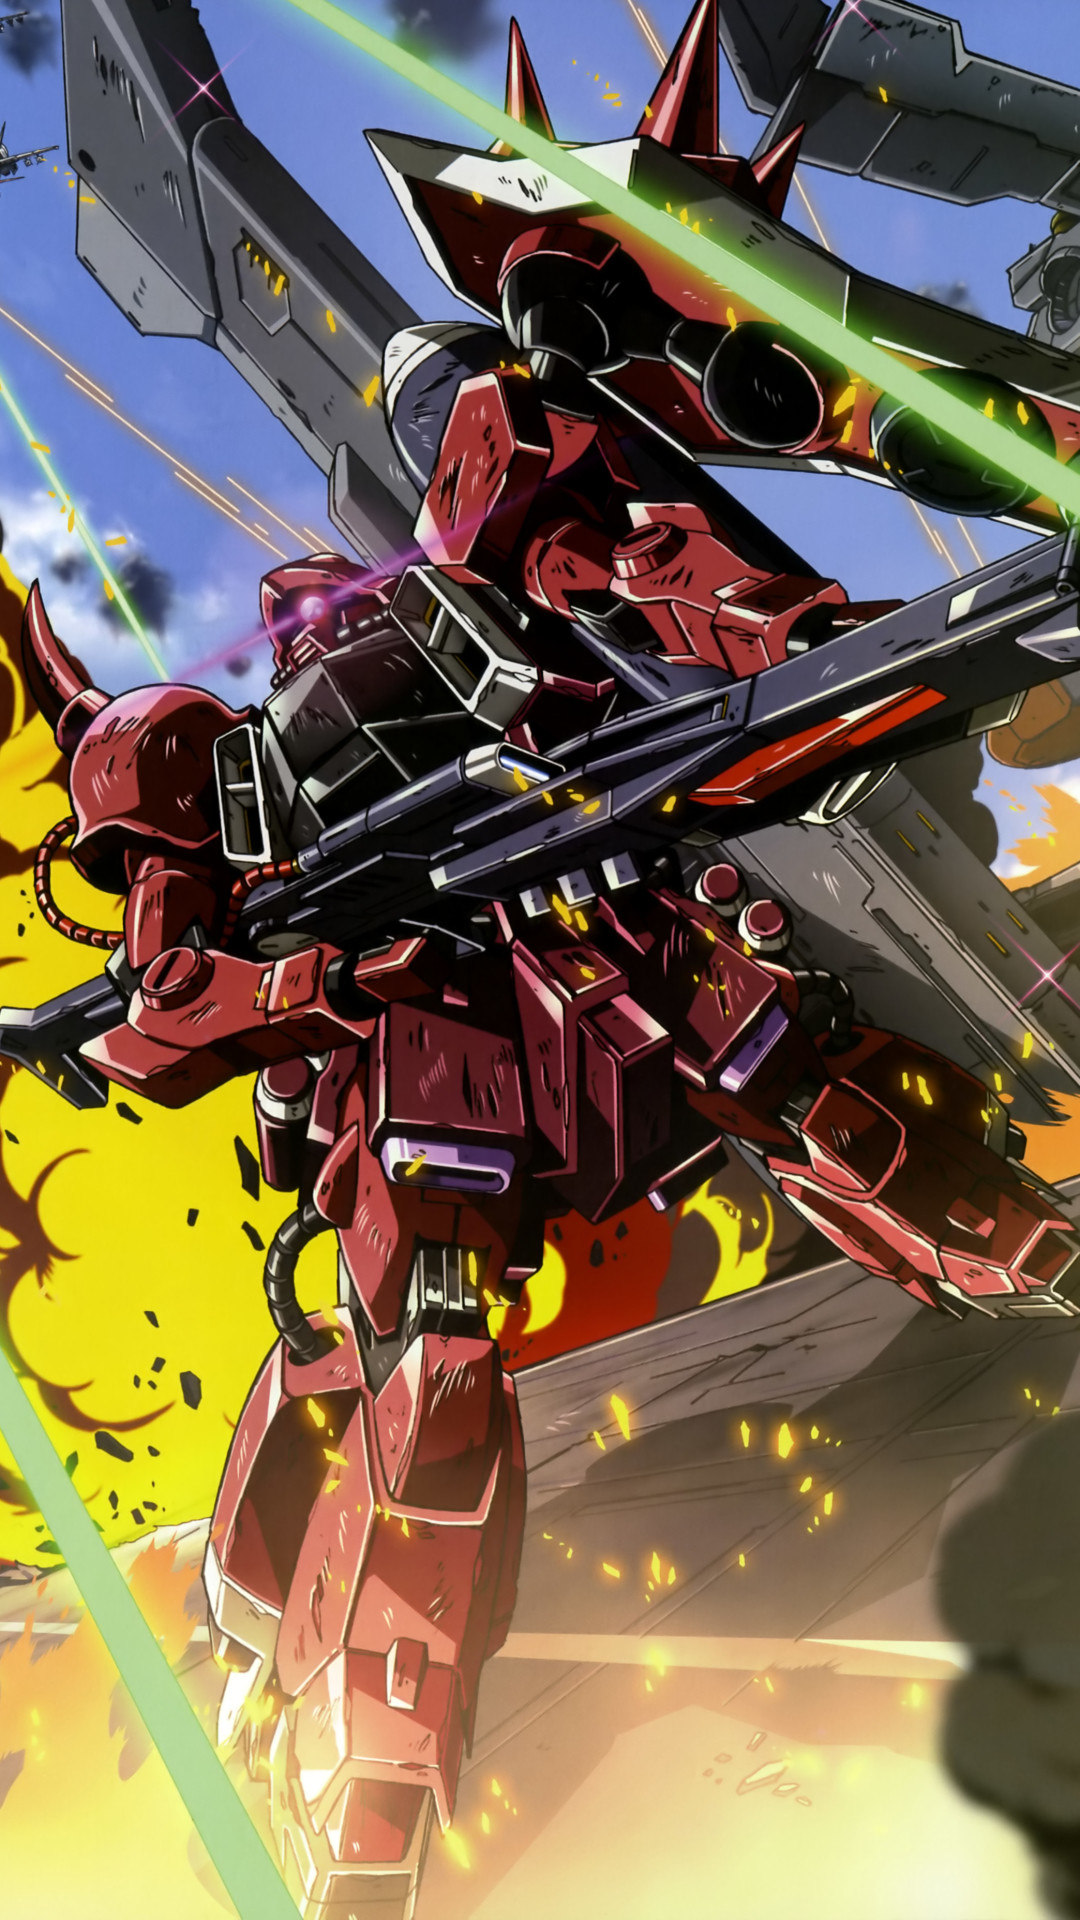 1080x1920 Anime Mobile Suit Gundam Seed Destiny. Wallpaper 695922